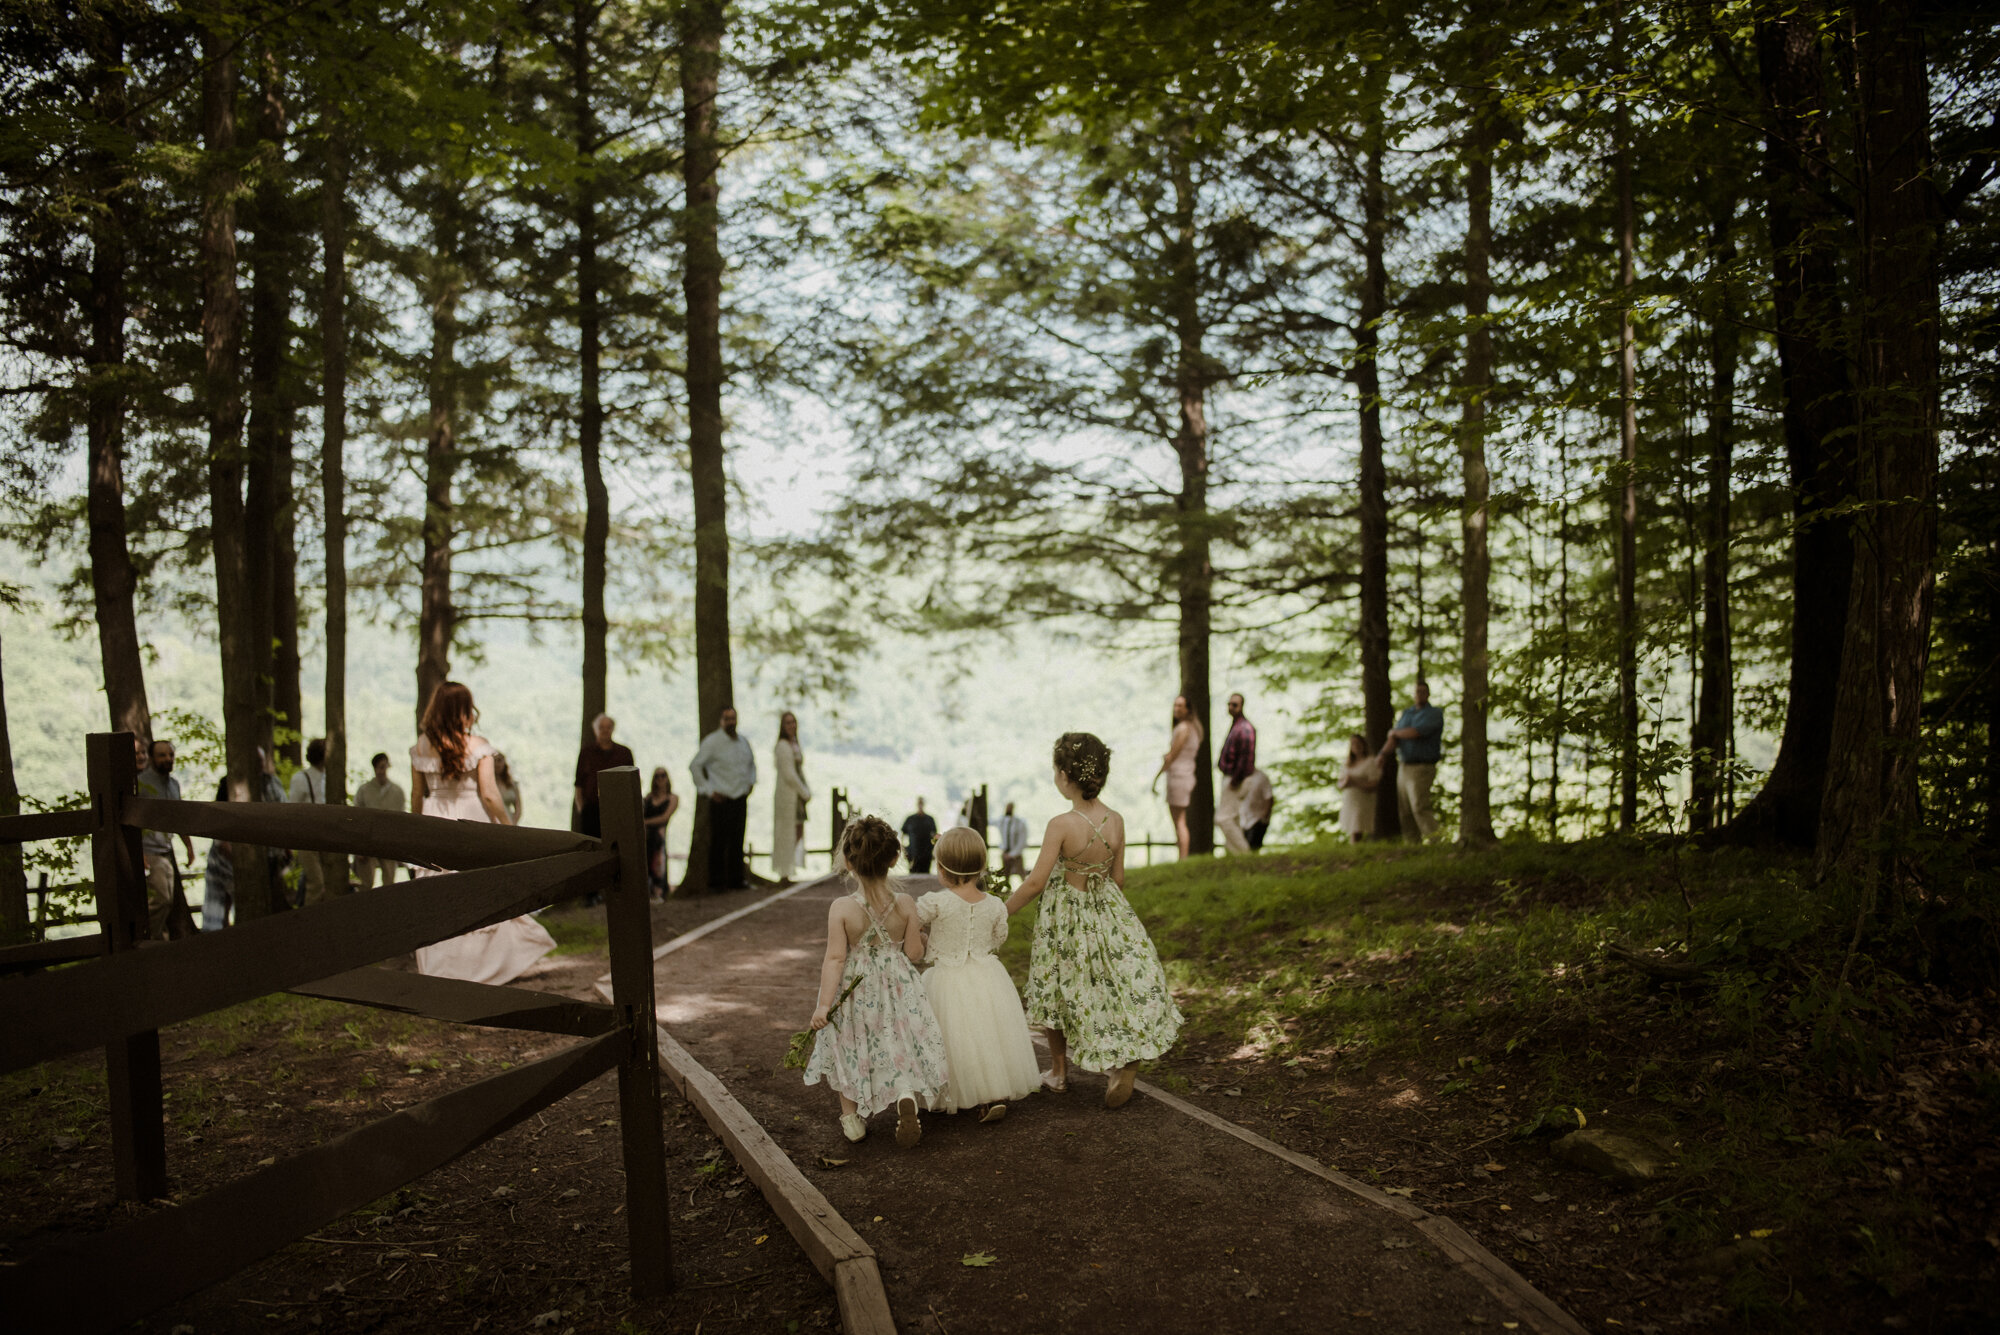 Mandy and Scott - Worlds End State Park Wedding - Backyard Pennsylvania Wedding - White Sails Creative Photography_22.jpg